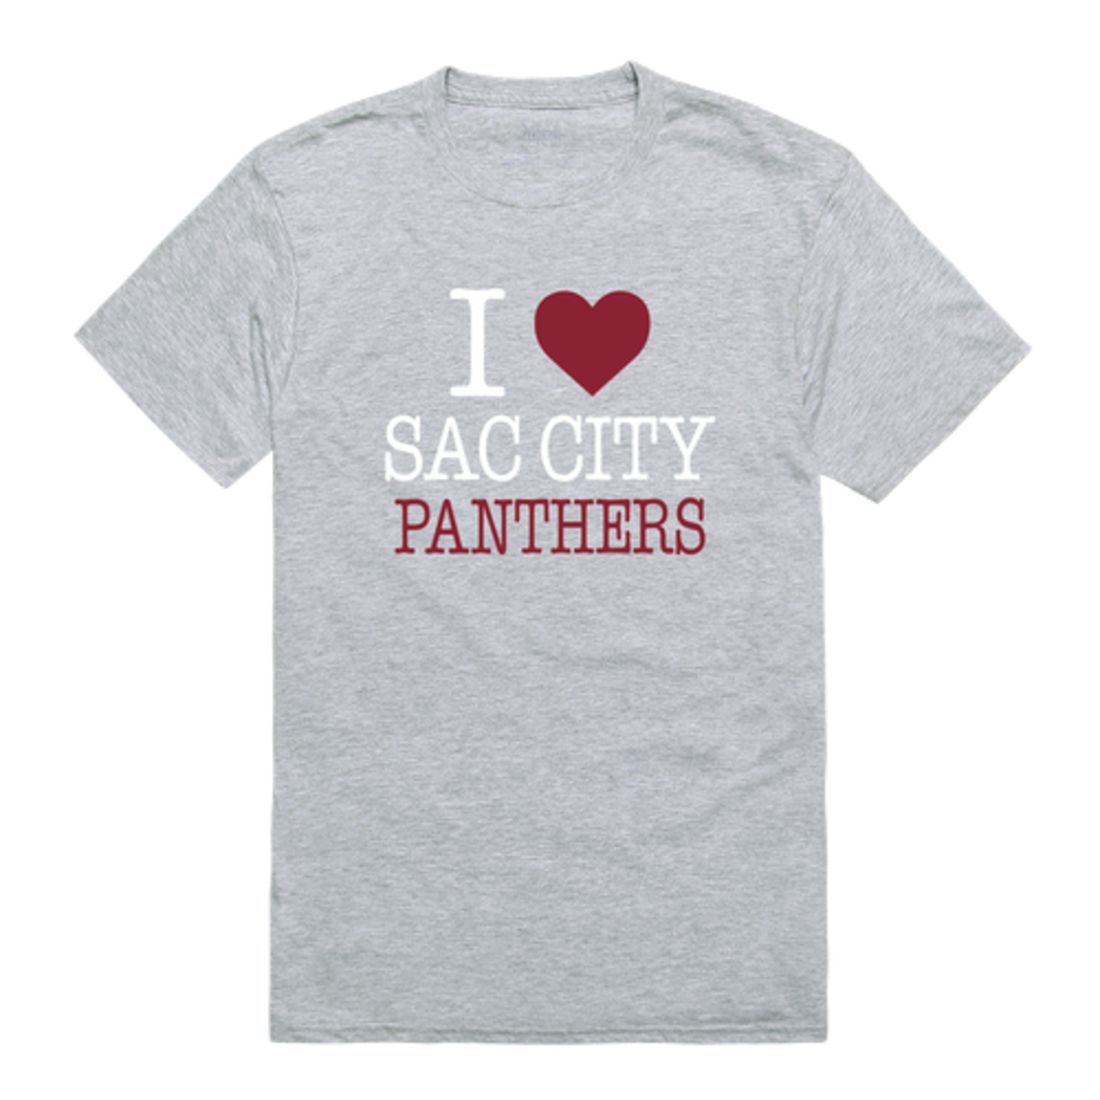 I Love Sacramento City College Panthers T-Shirt Tee